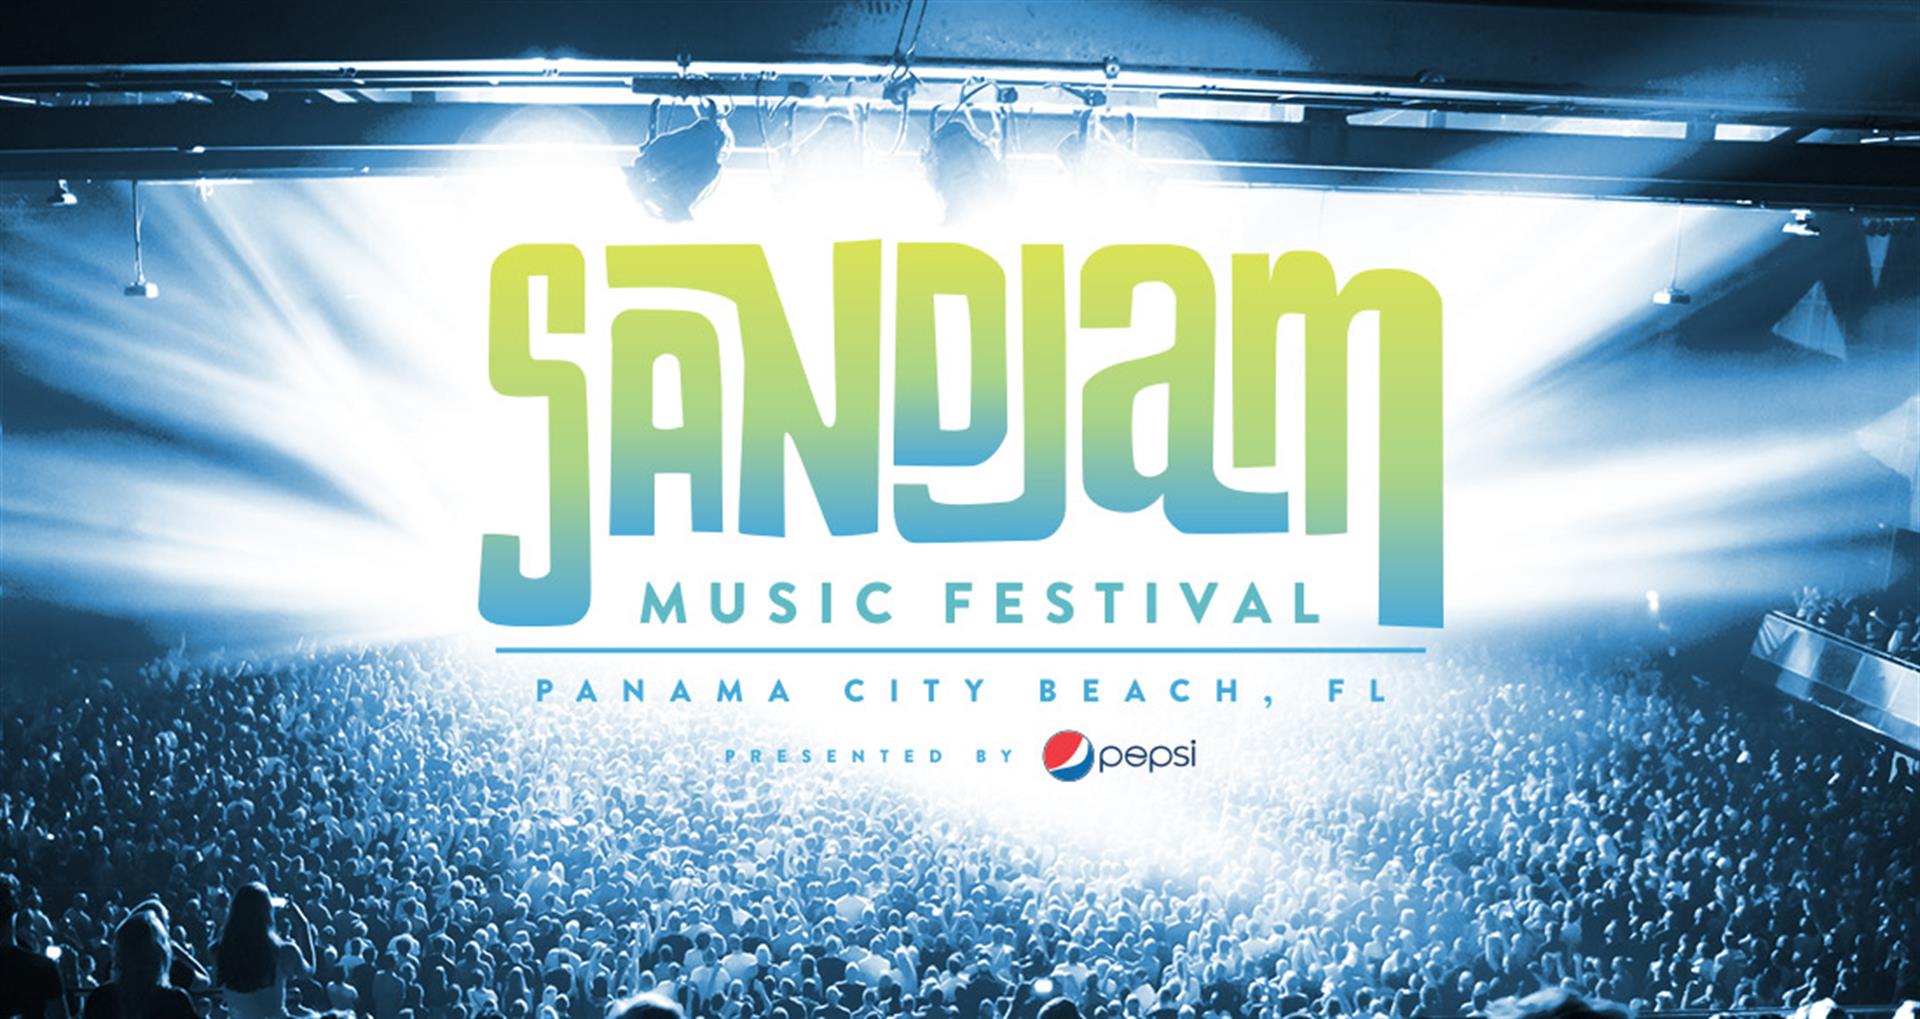 SandJam Music Festival  Panama City Beach